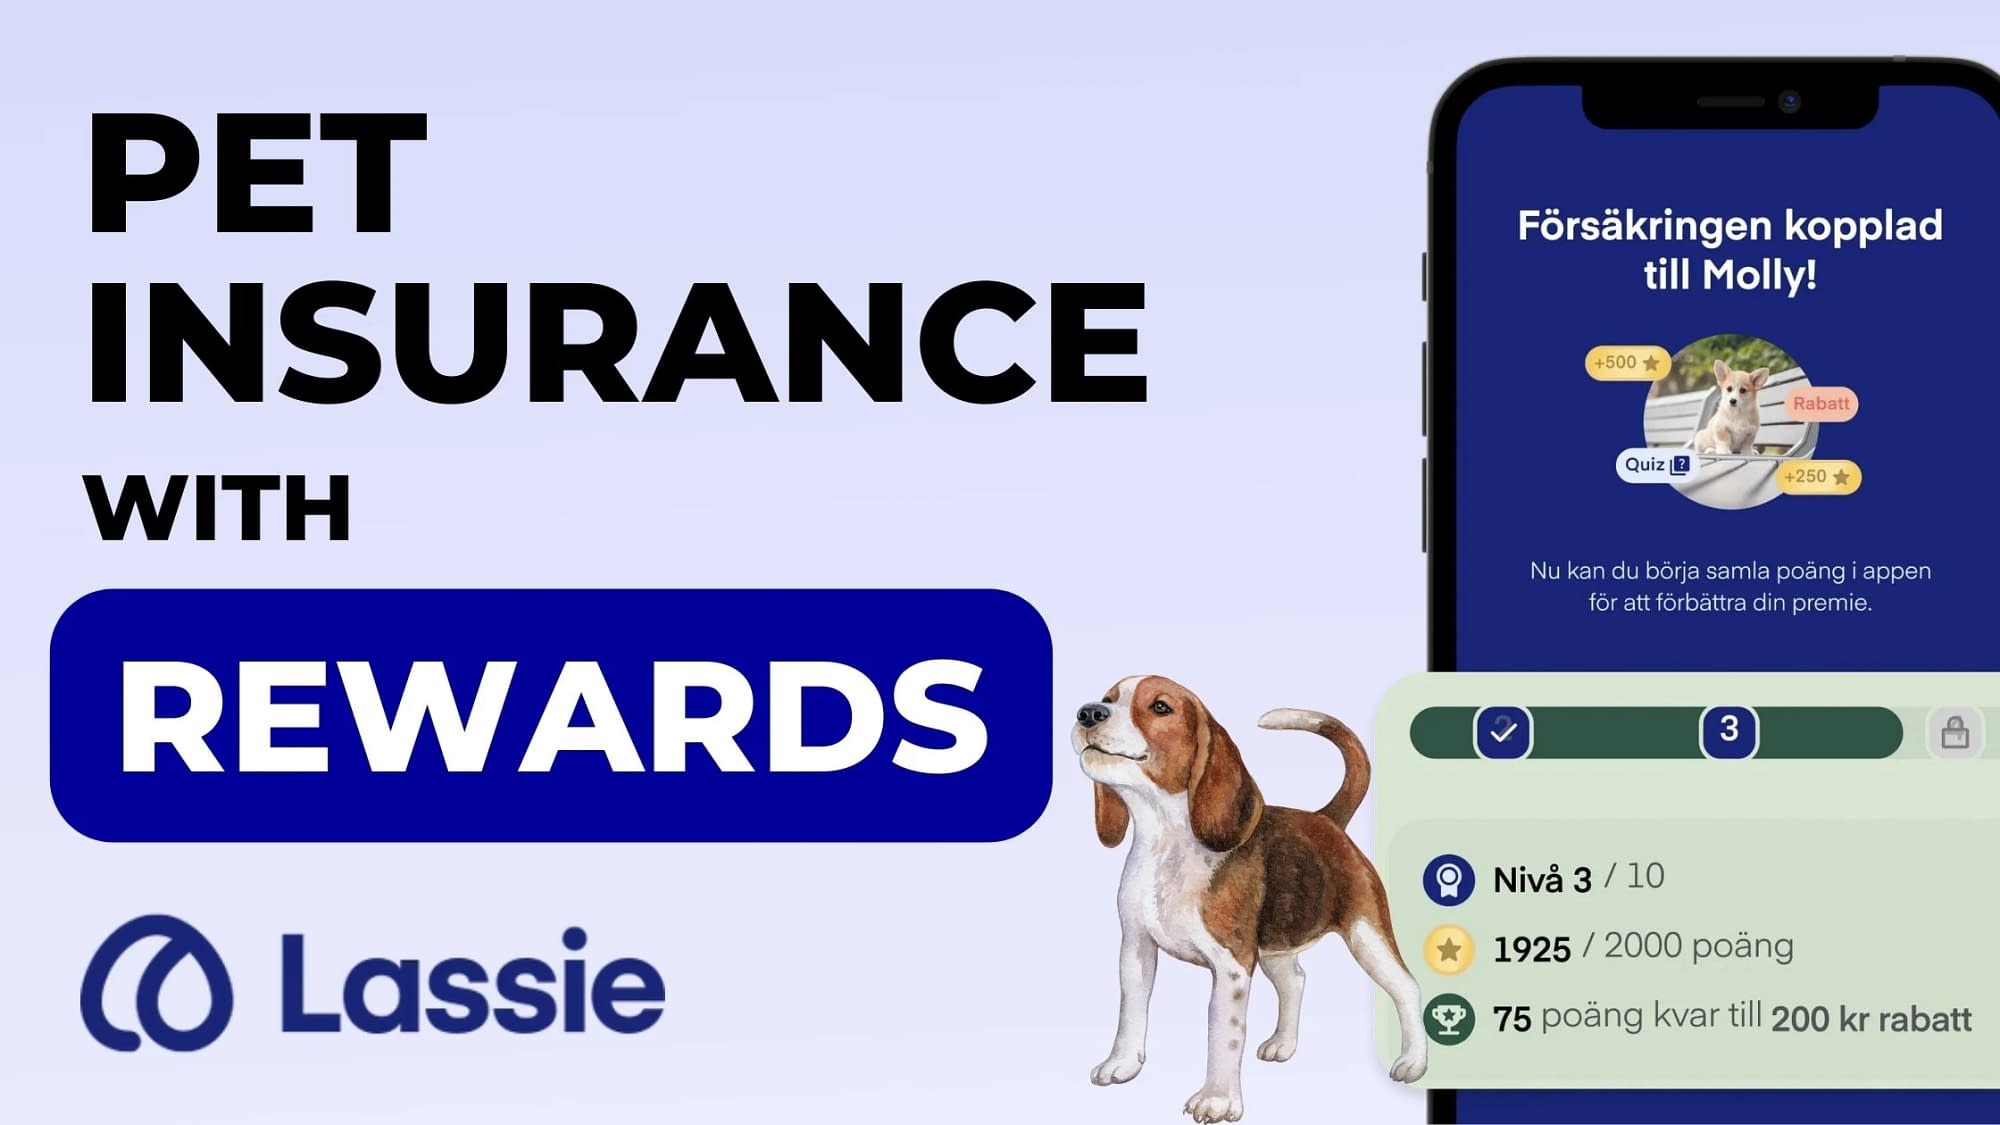 Lassie: Pet Insurance with Rewards